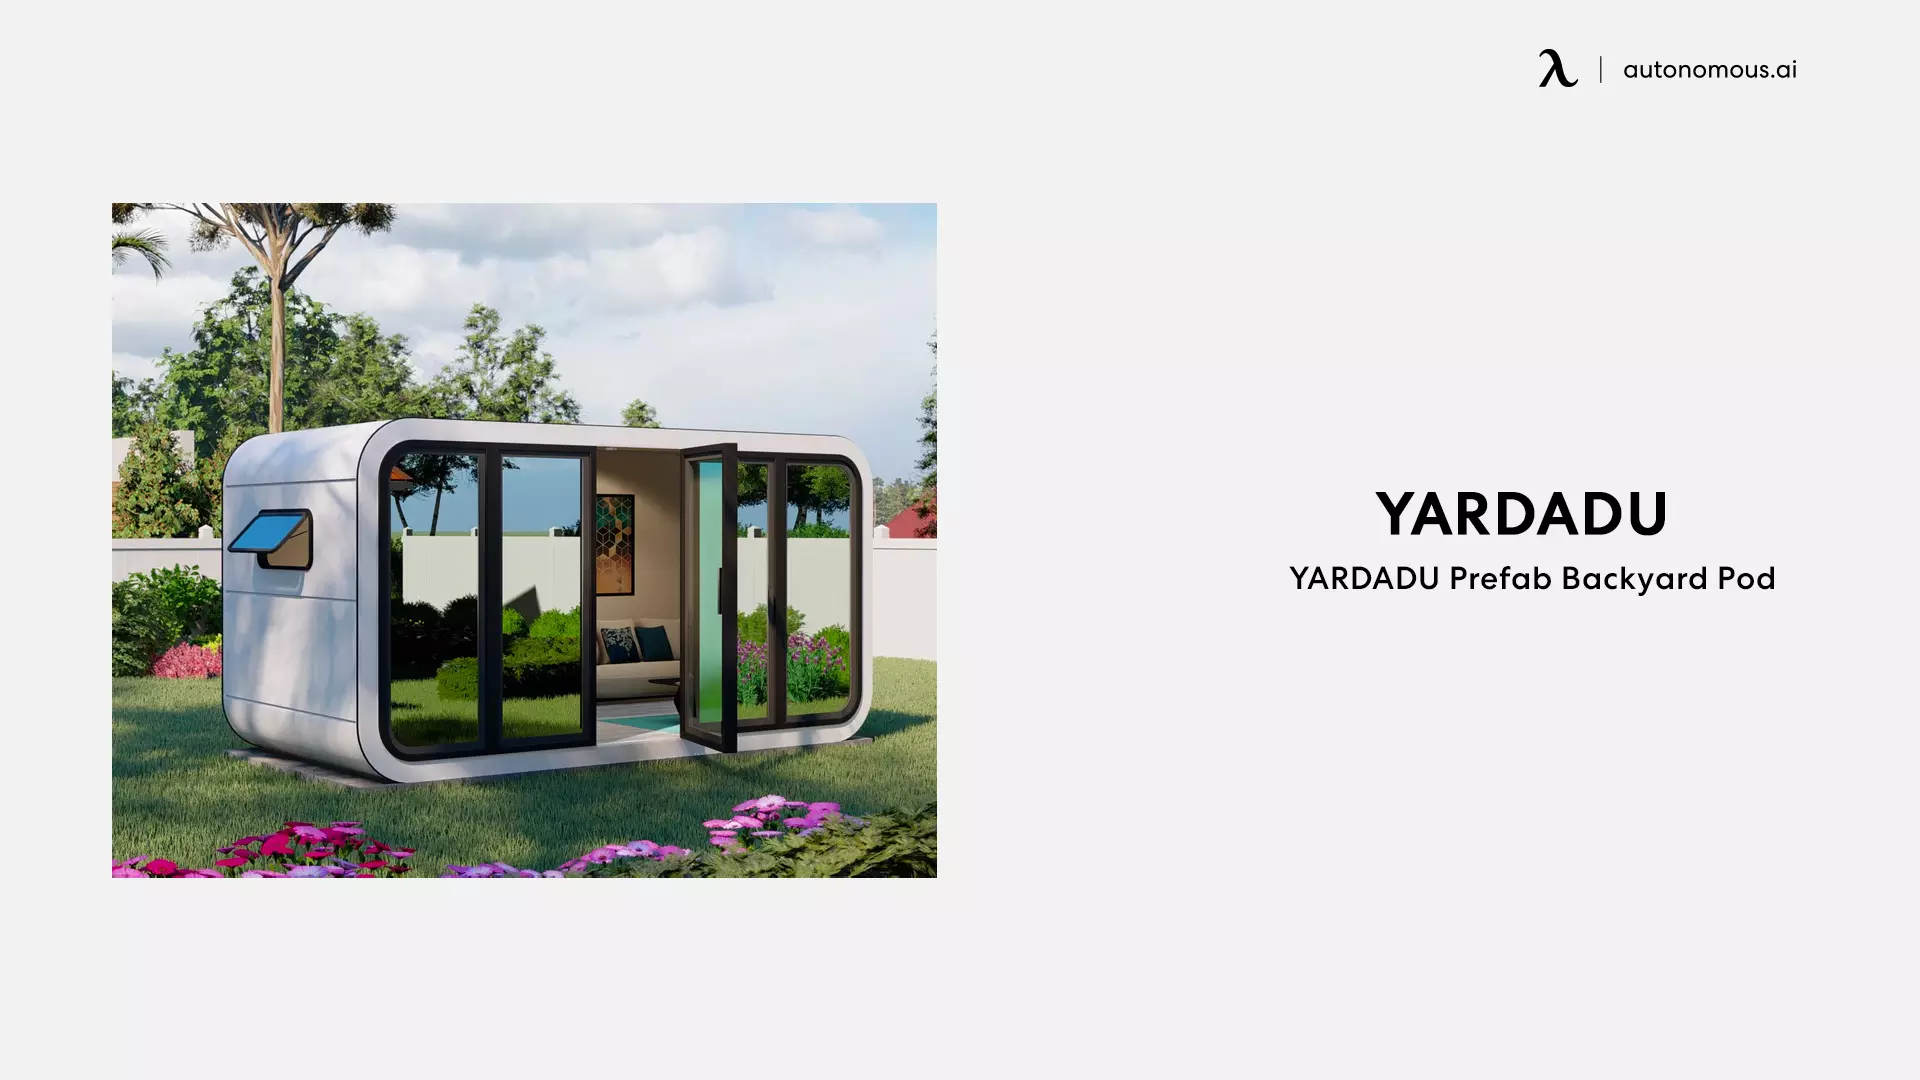 The YARDADU Prefab Backyard Pod